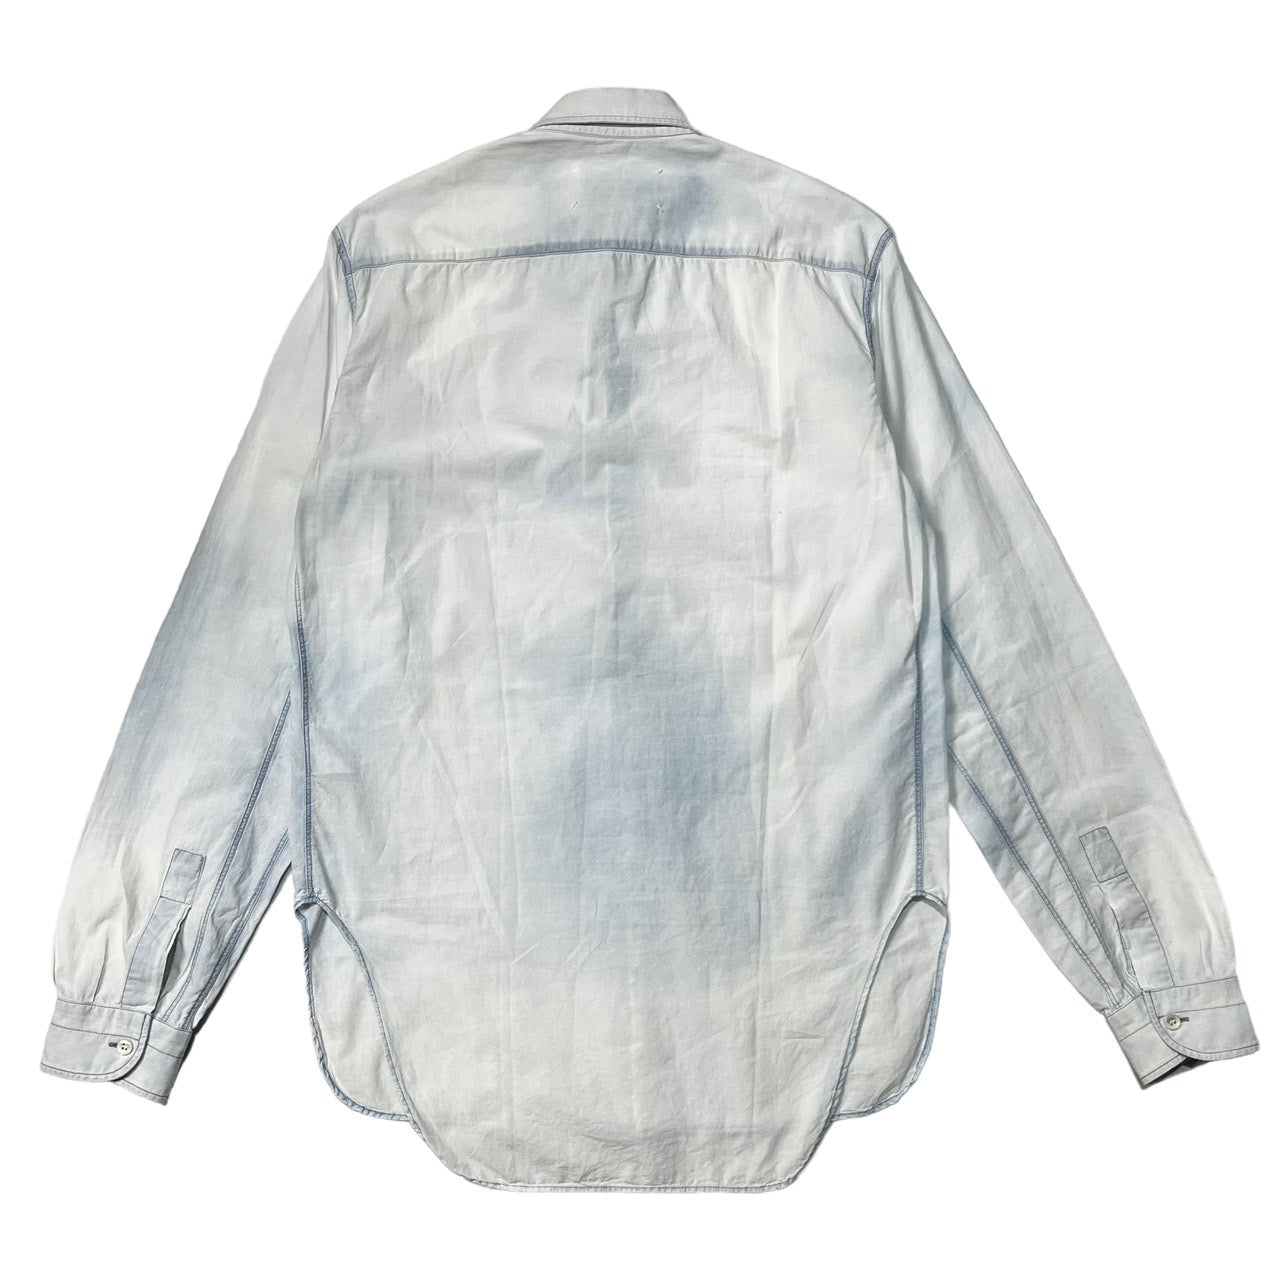 MAISON MARGIELA(メゾンマルジェラ) 16SS bleached pullover shirt ブリーチ加工 プルオーバーシャツ  S30DL0314 SIZE 44(S) ライトブルー